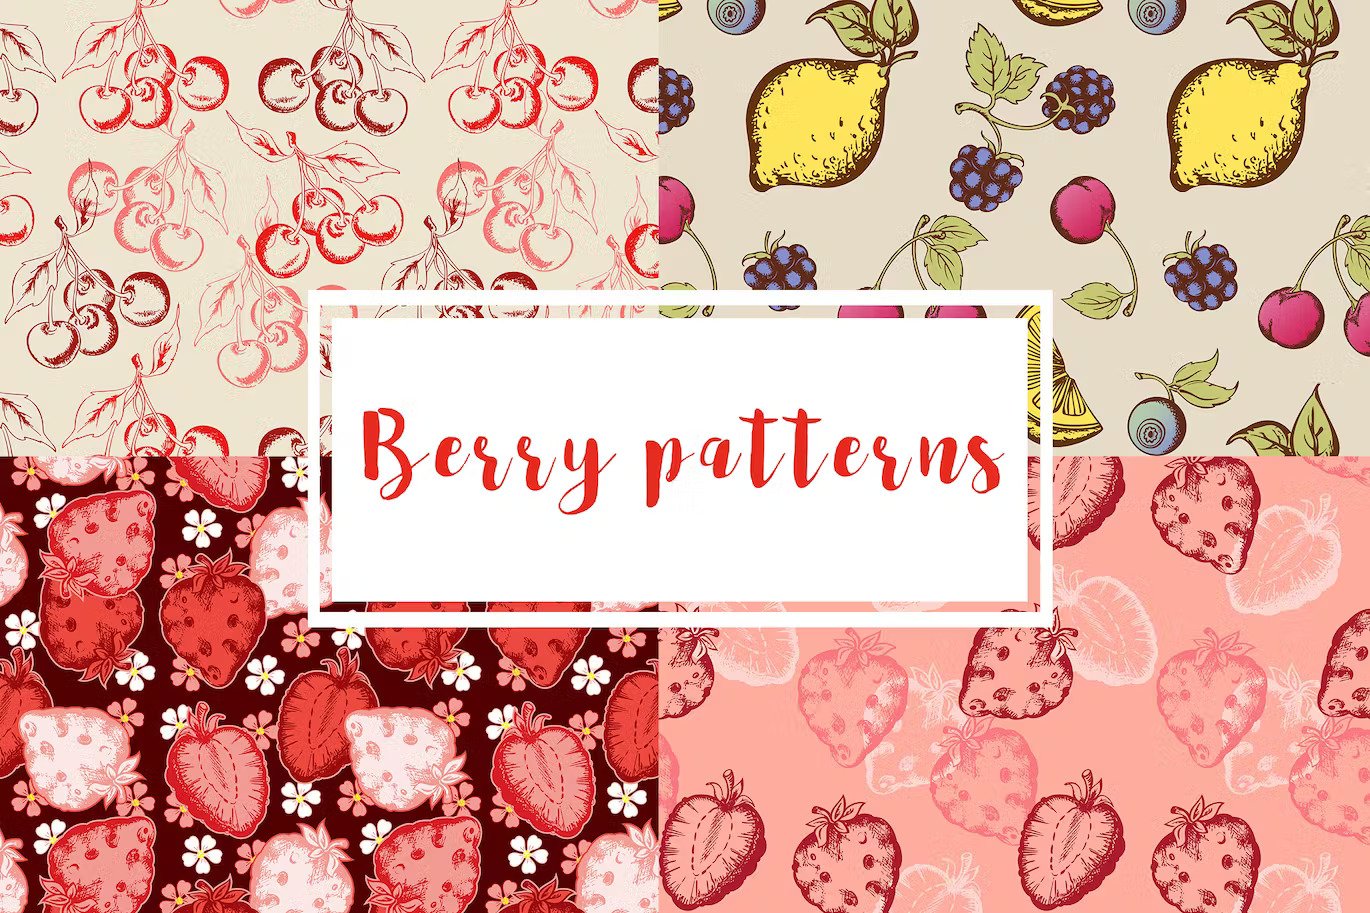 A berry patterns